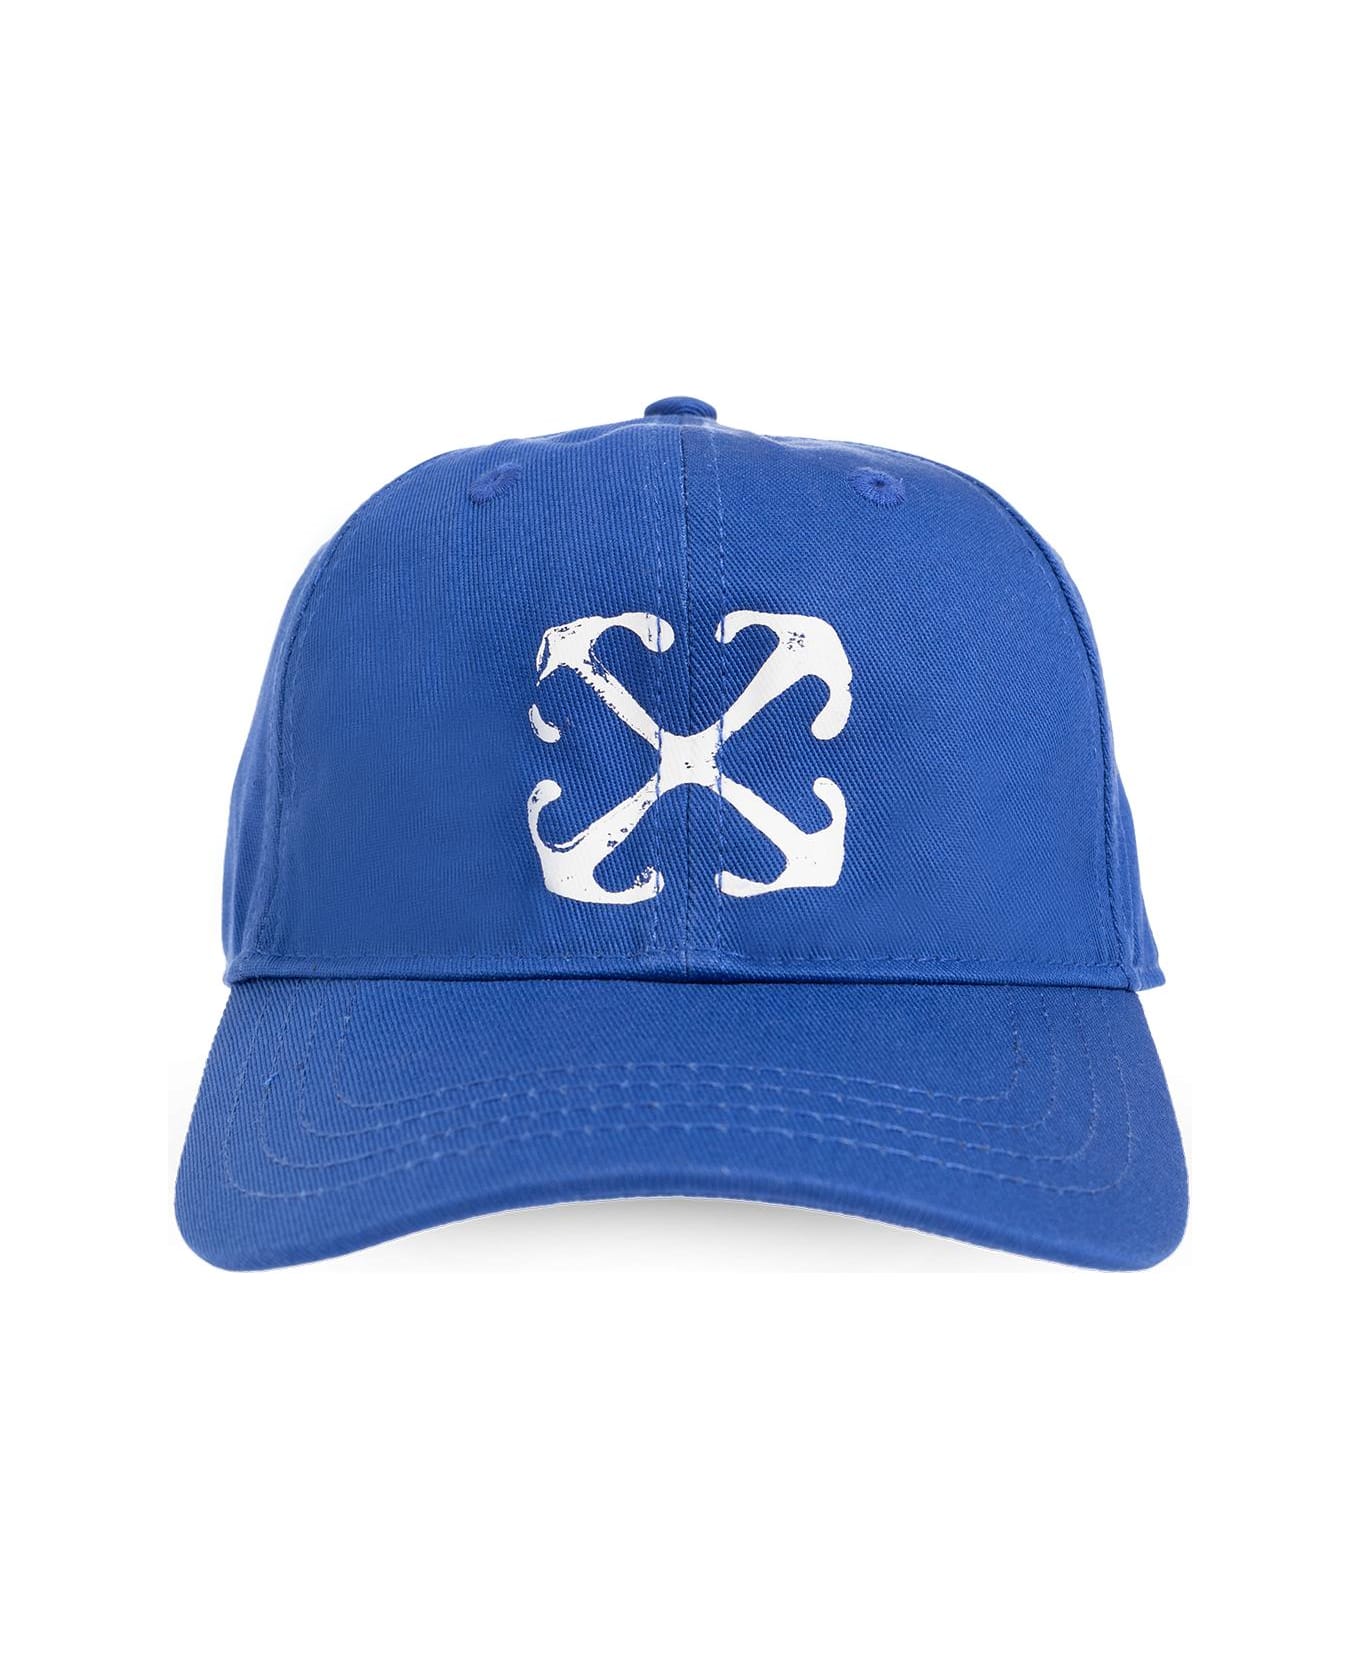 Off-White Kids Baseball Cap With Logo - Blue/white